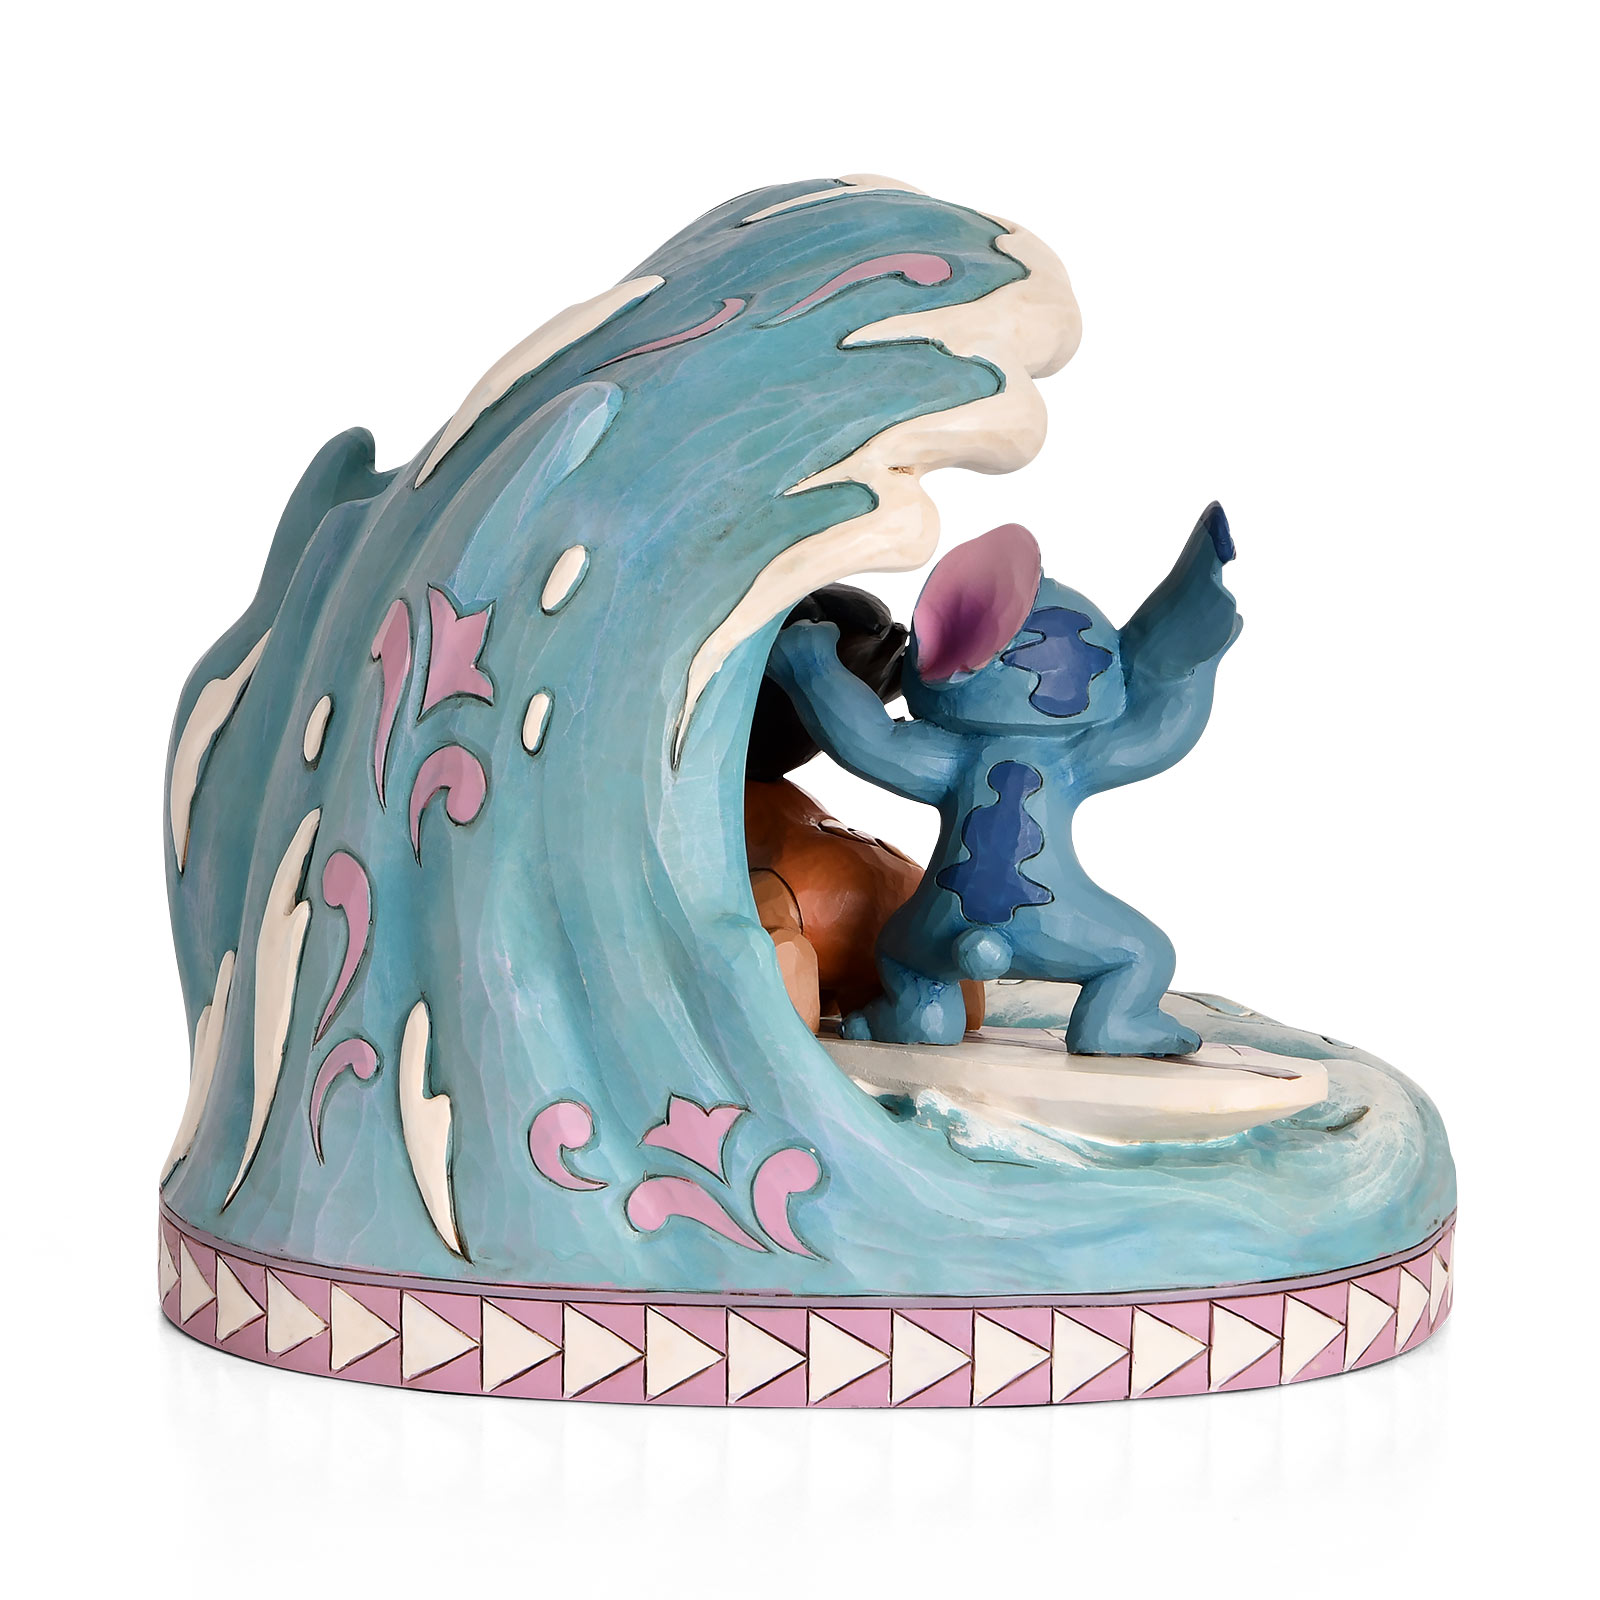 Lilo & Stitch - Catch The Wave figurine